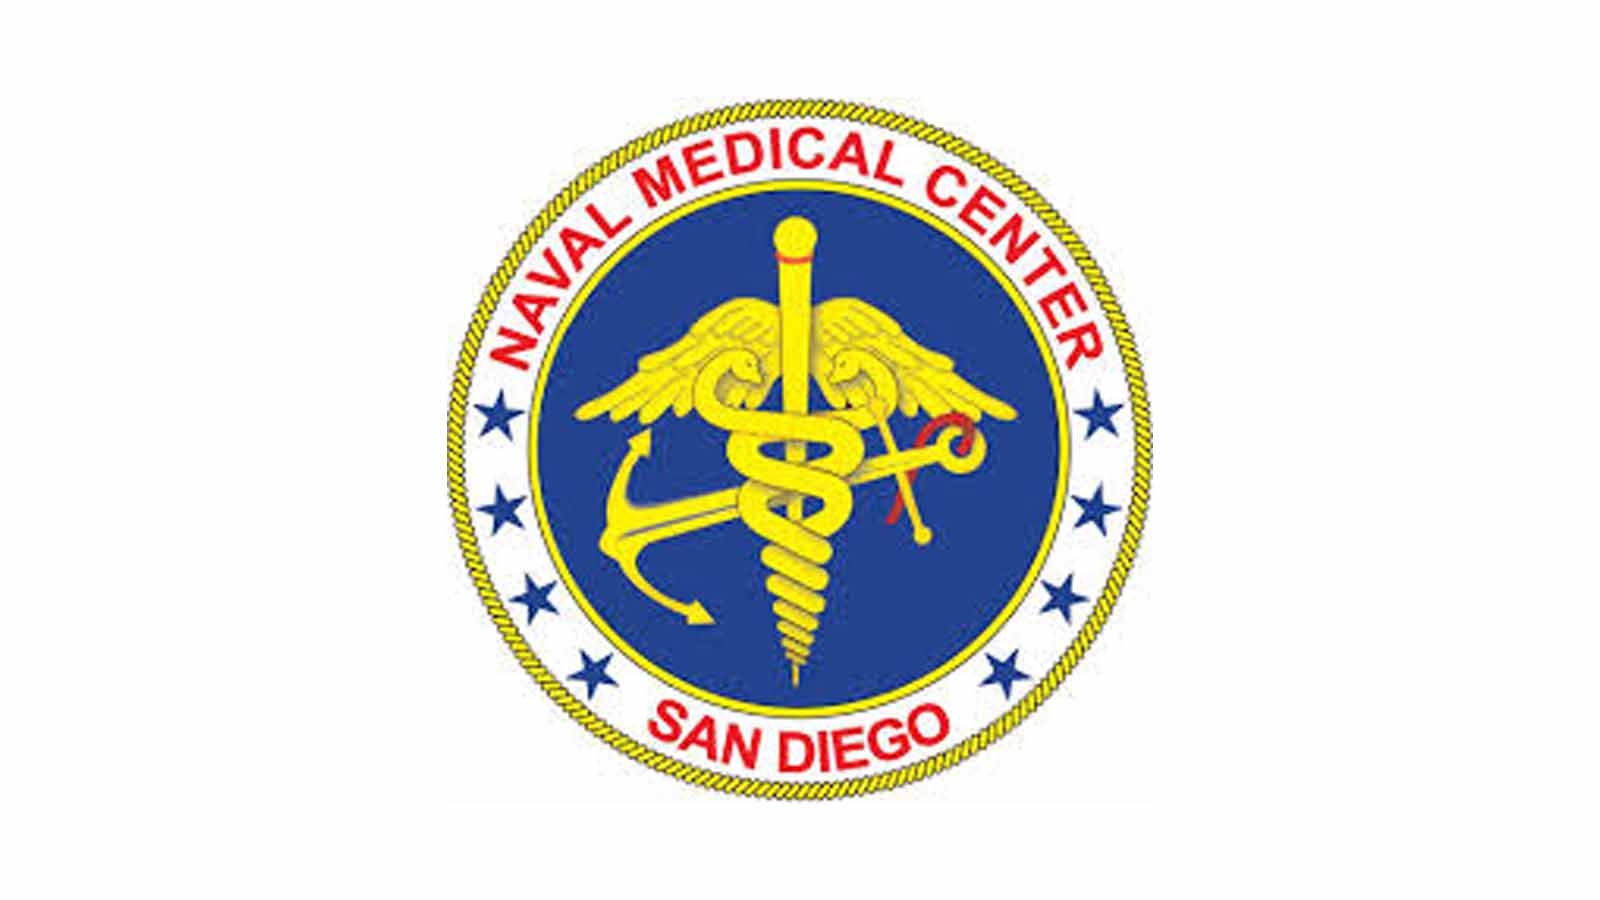 naval medical center logo